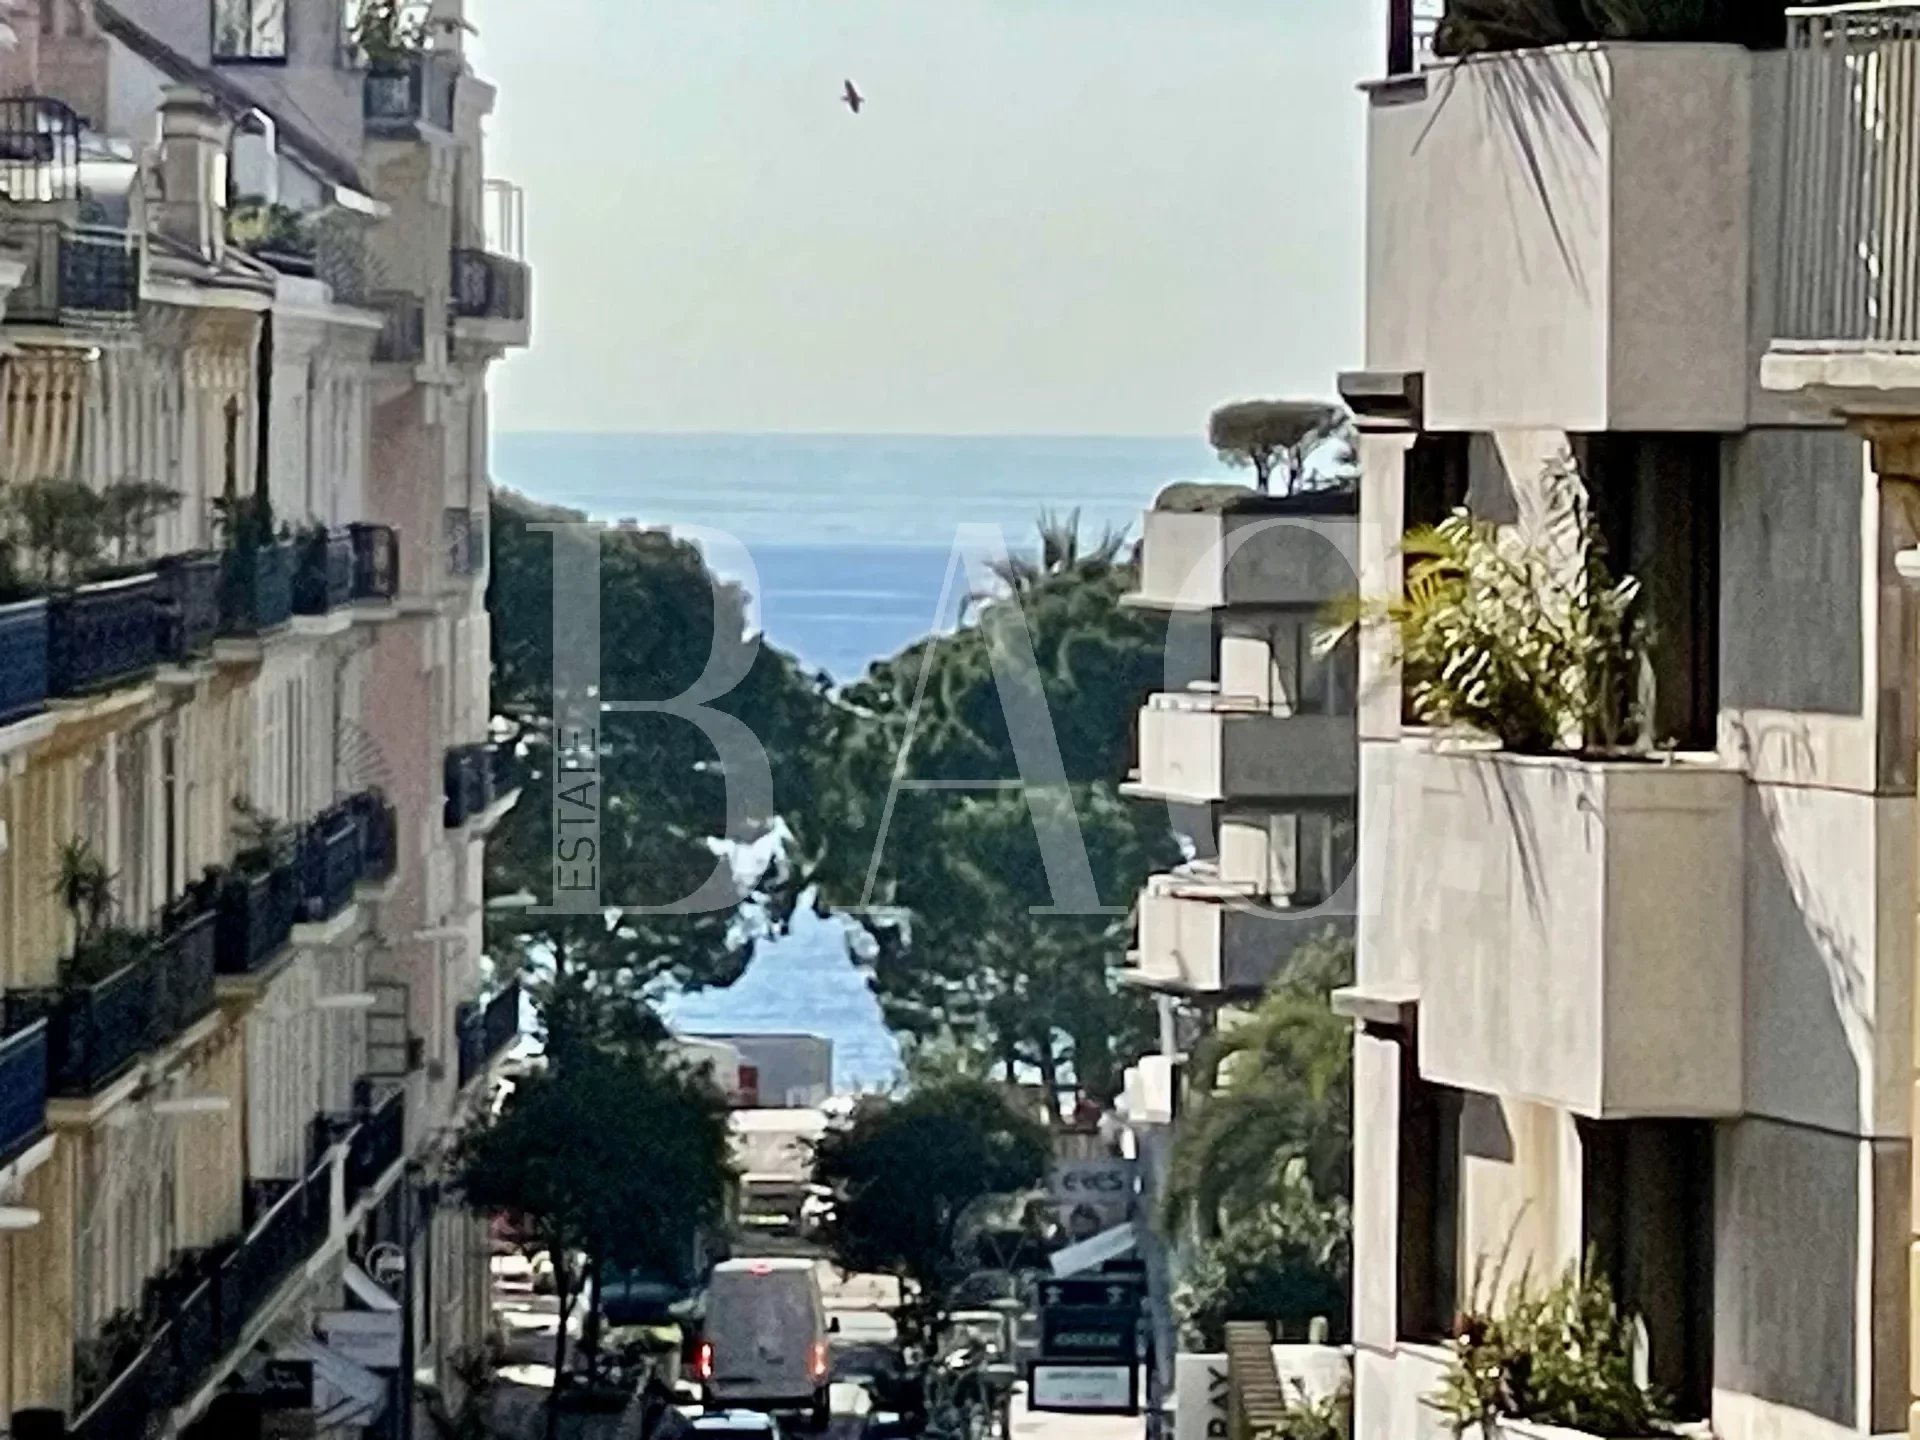 Appartement en plein coeur de Cannes, idéal locatif